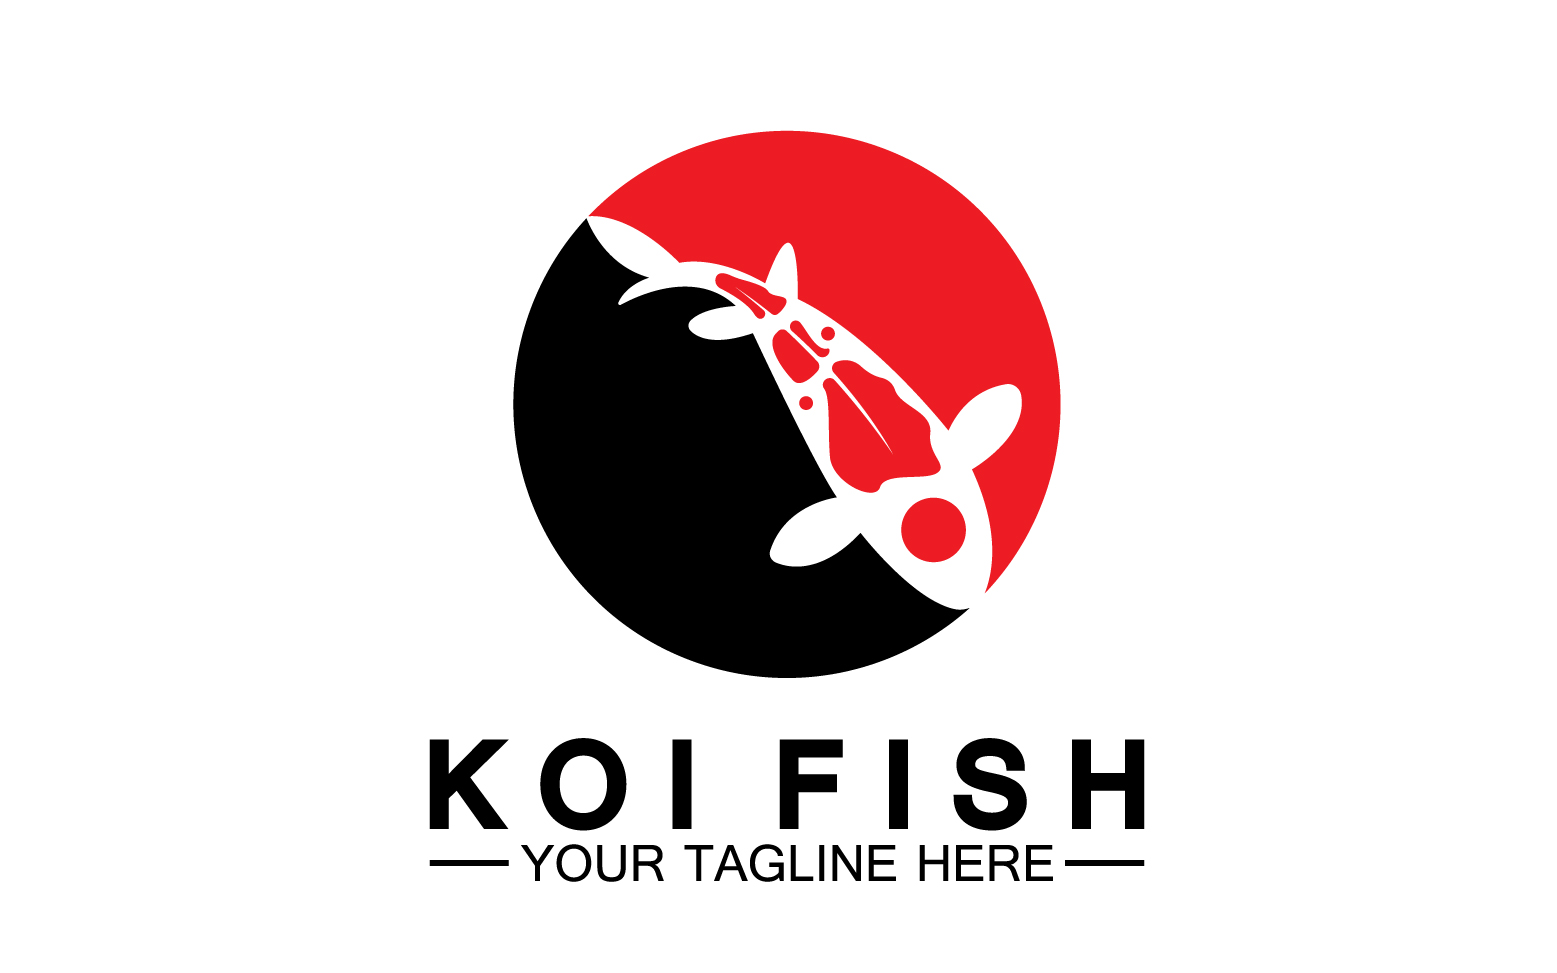 Fish koi black and red icon logo vector v48